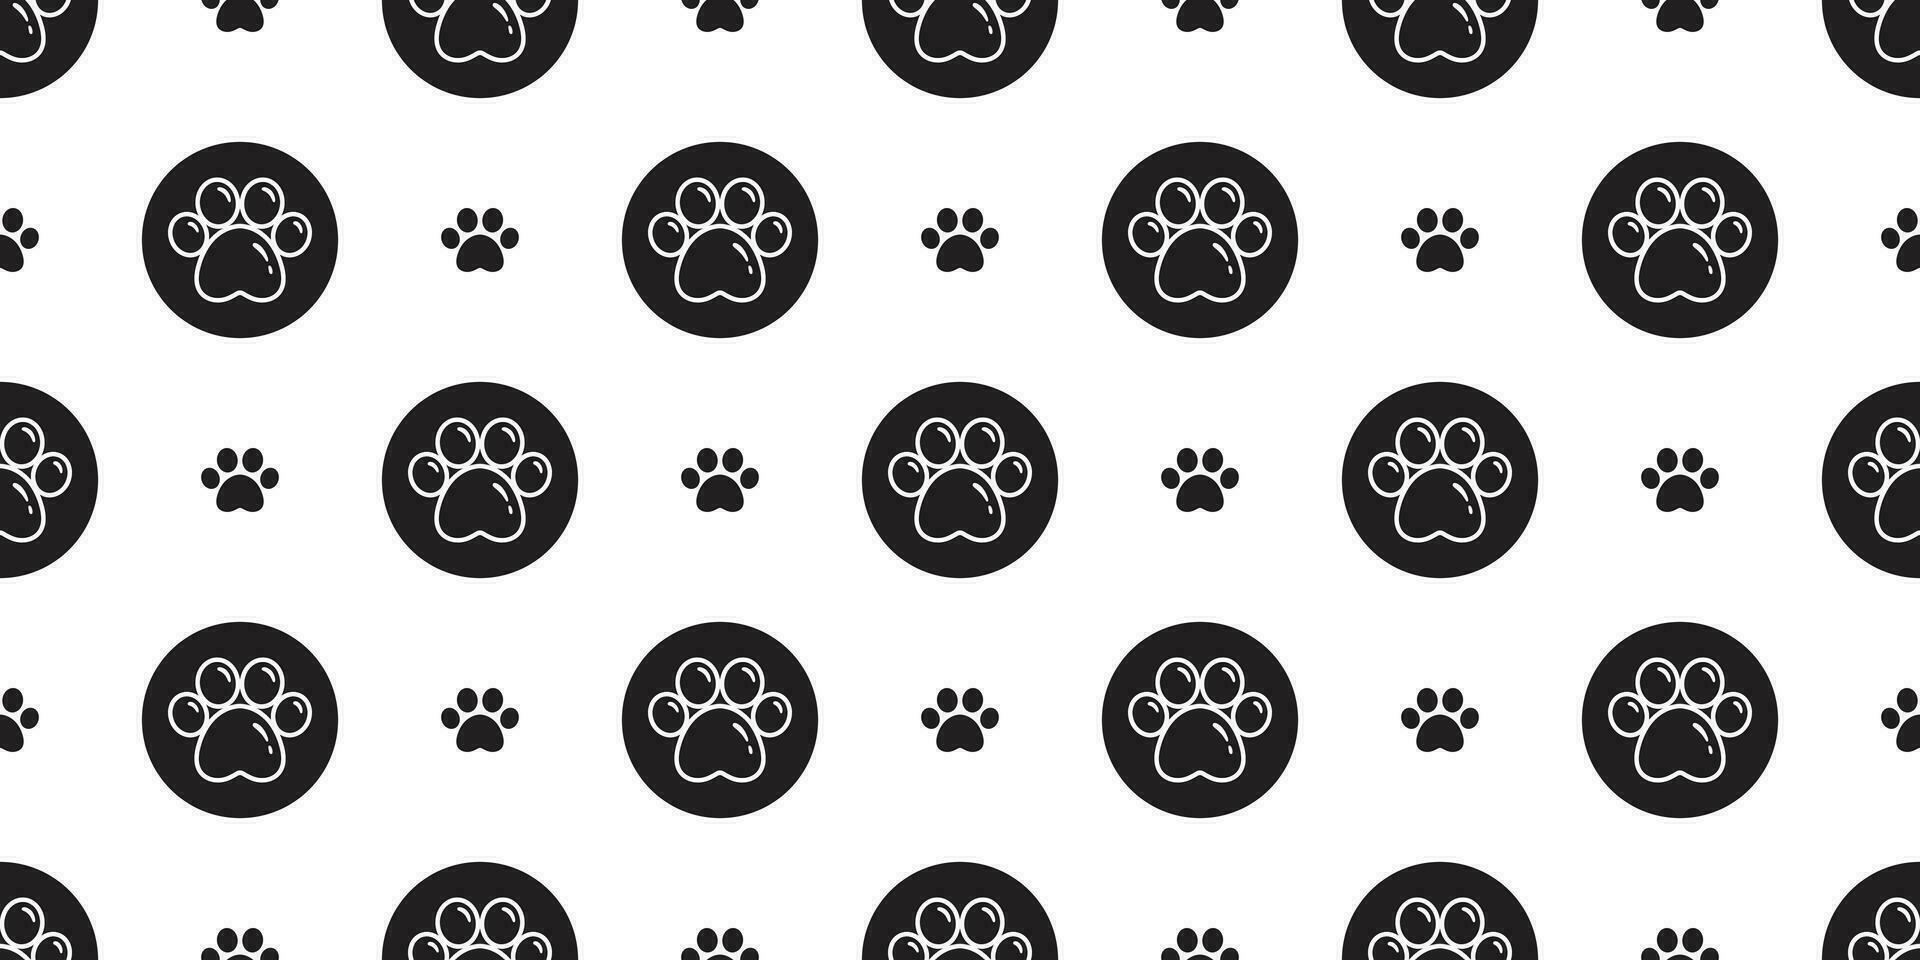 Dog Paw seamless pattern vector footprint polka dot french bulldog cartoon scarf isolated repeat wallpaper tile background illustration cartoon